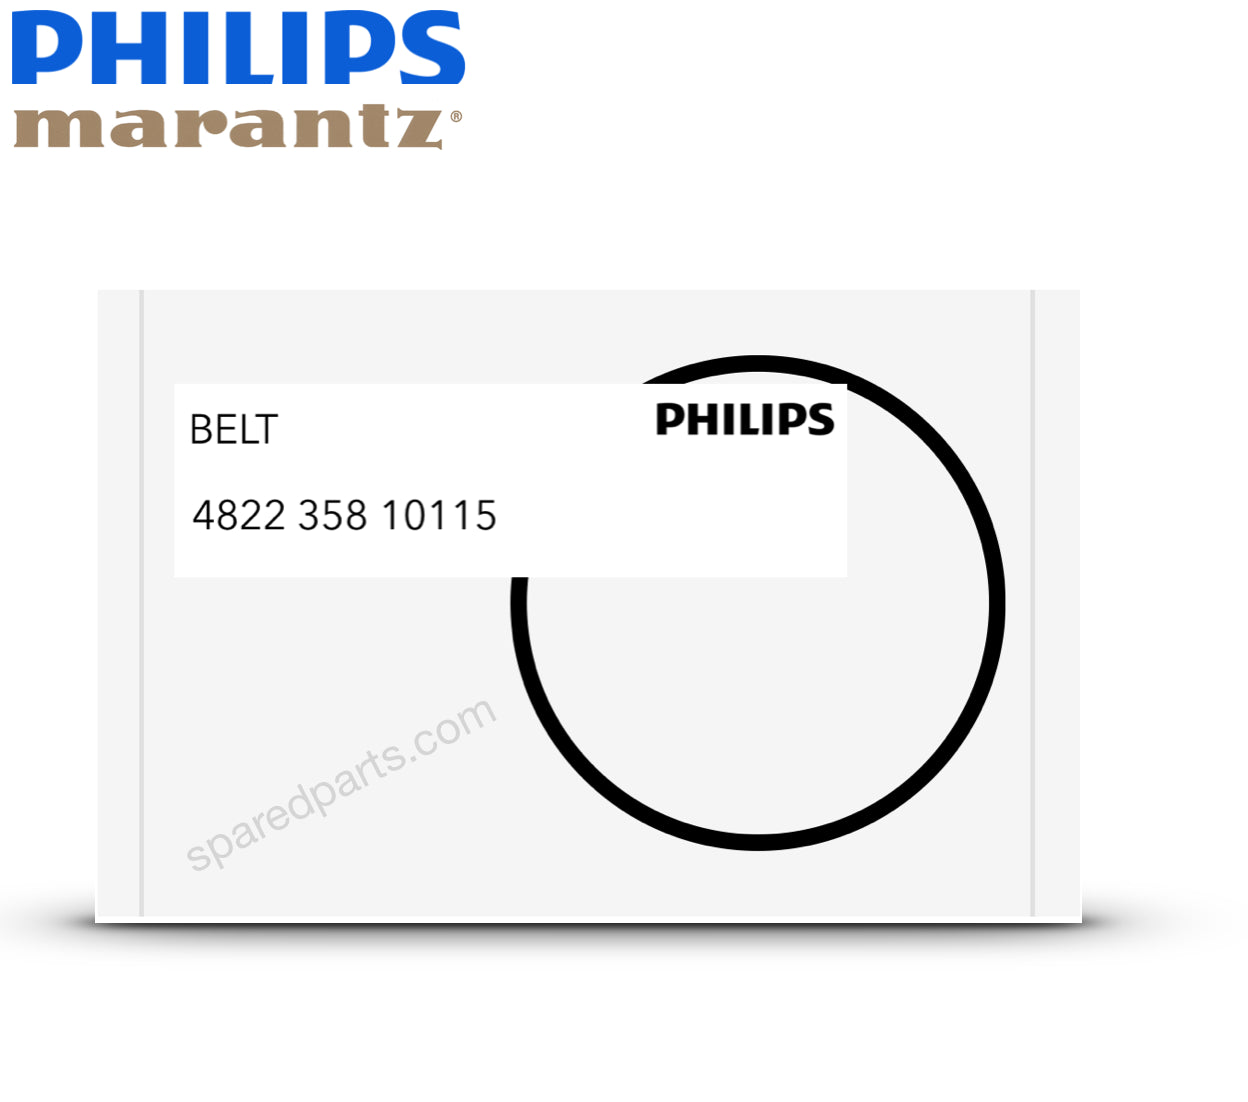 Marantz Philips Belt, Loading 4822 358 10115